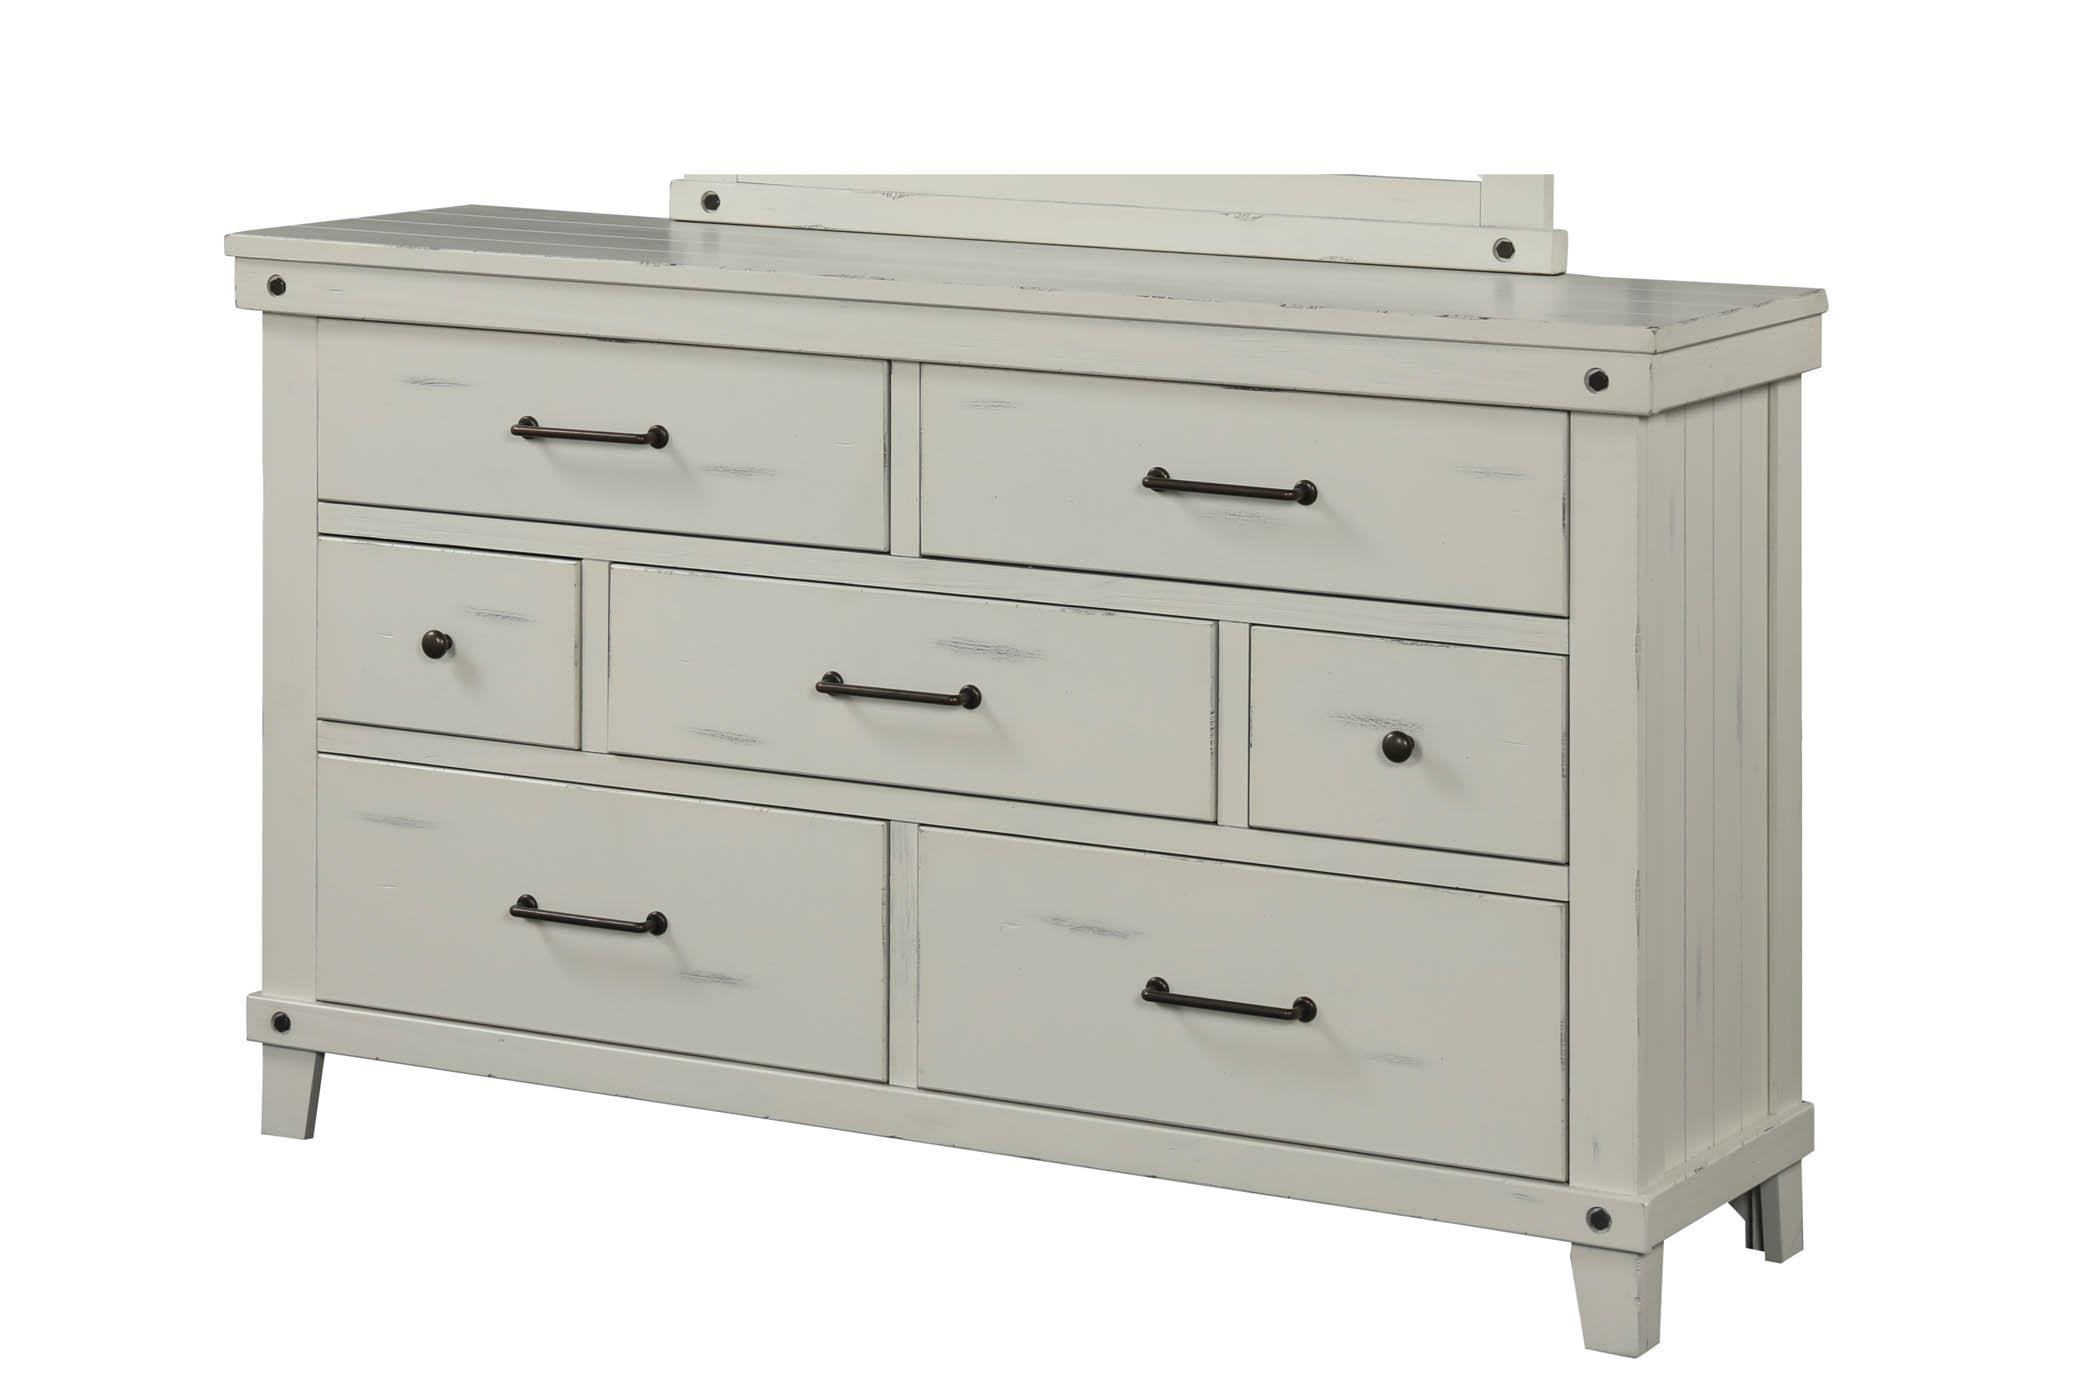 Classic, Transitional Dresser SPRUCE CREEK 1709-130 1709-130 in White 